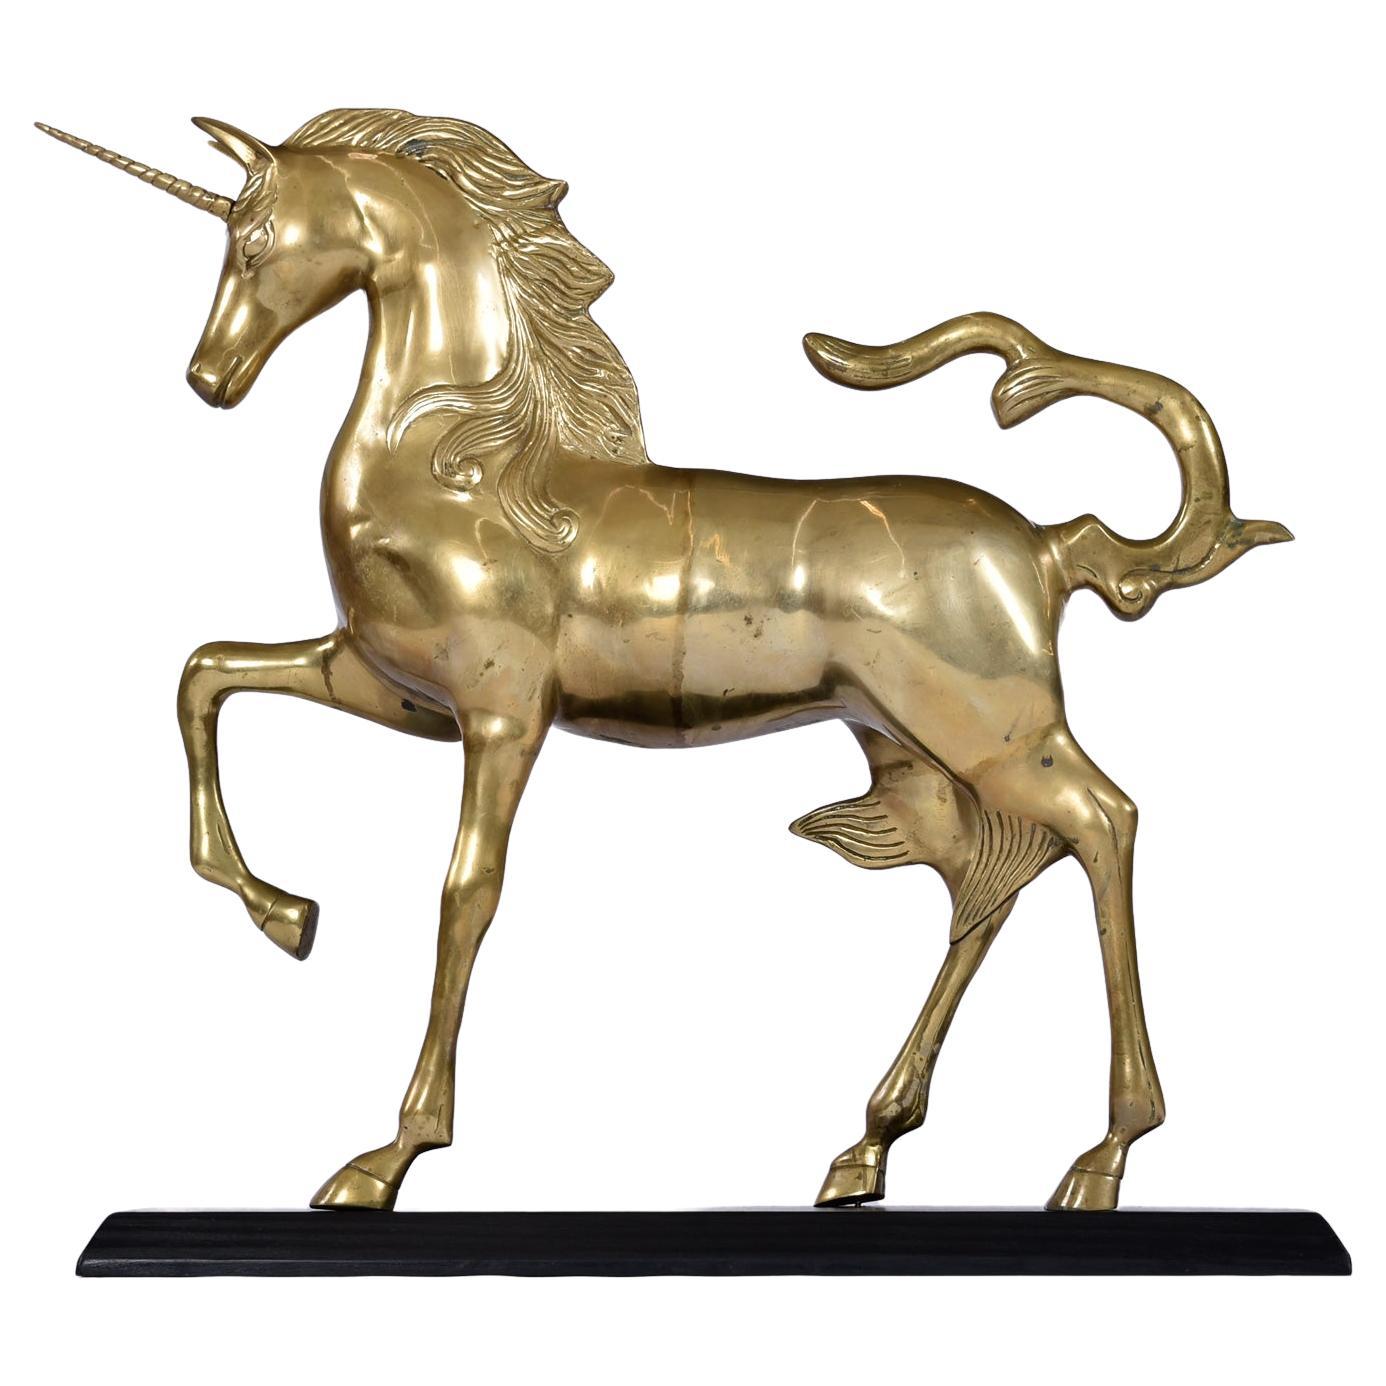 Monumental 1970s Decorative Hollywood Regency Solid Brass Unicorn Horse